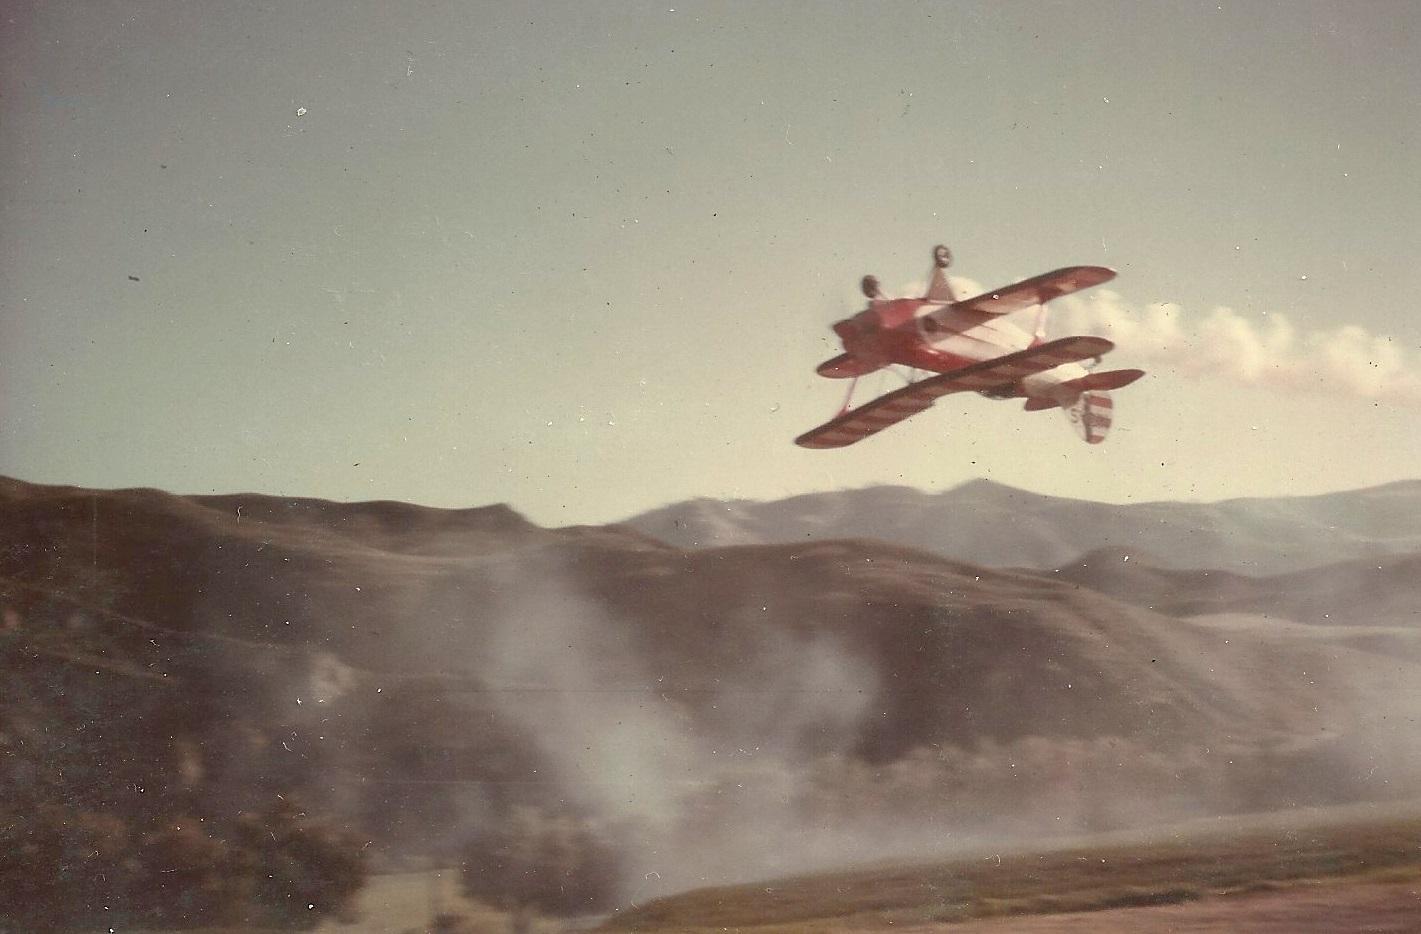 Bi-Plane performing stunt